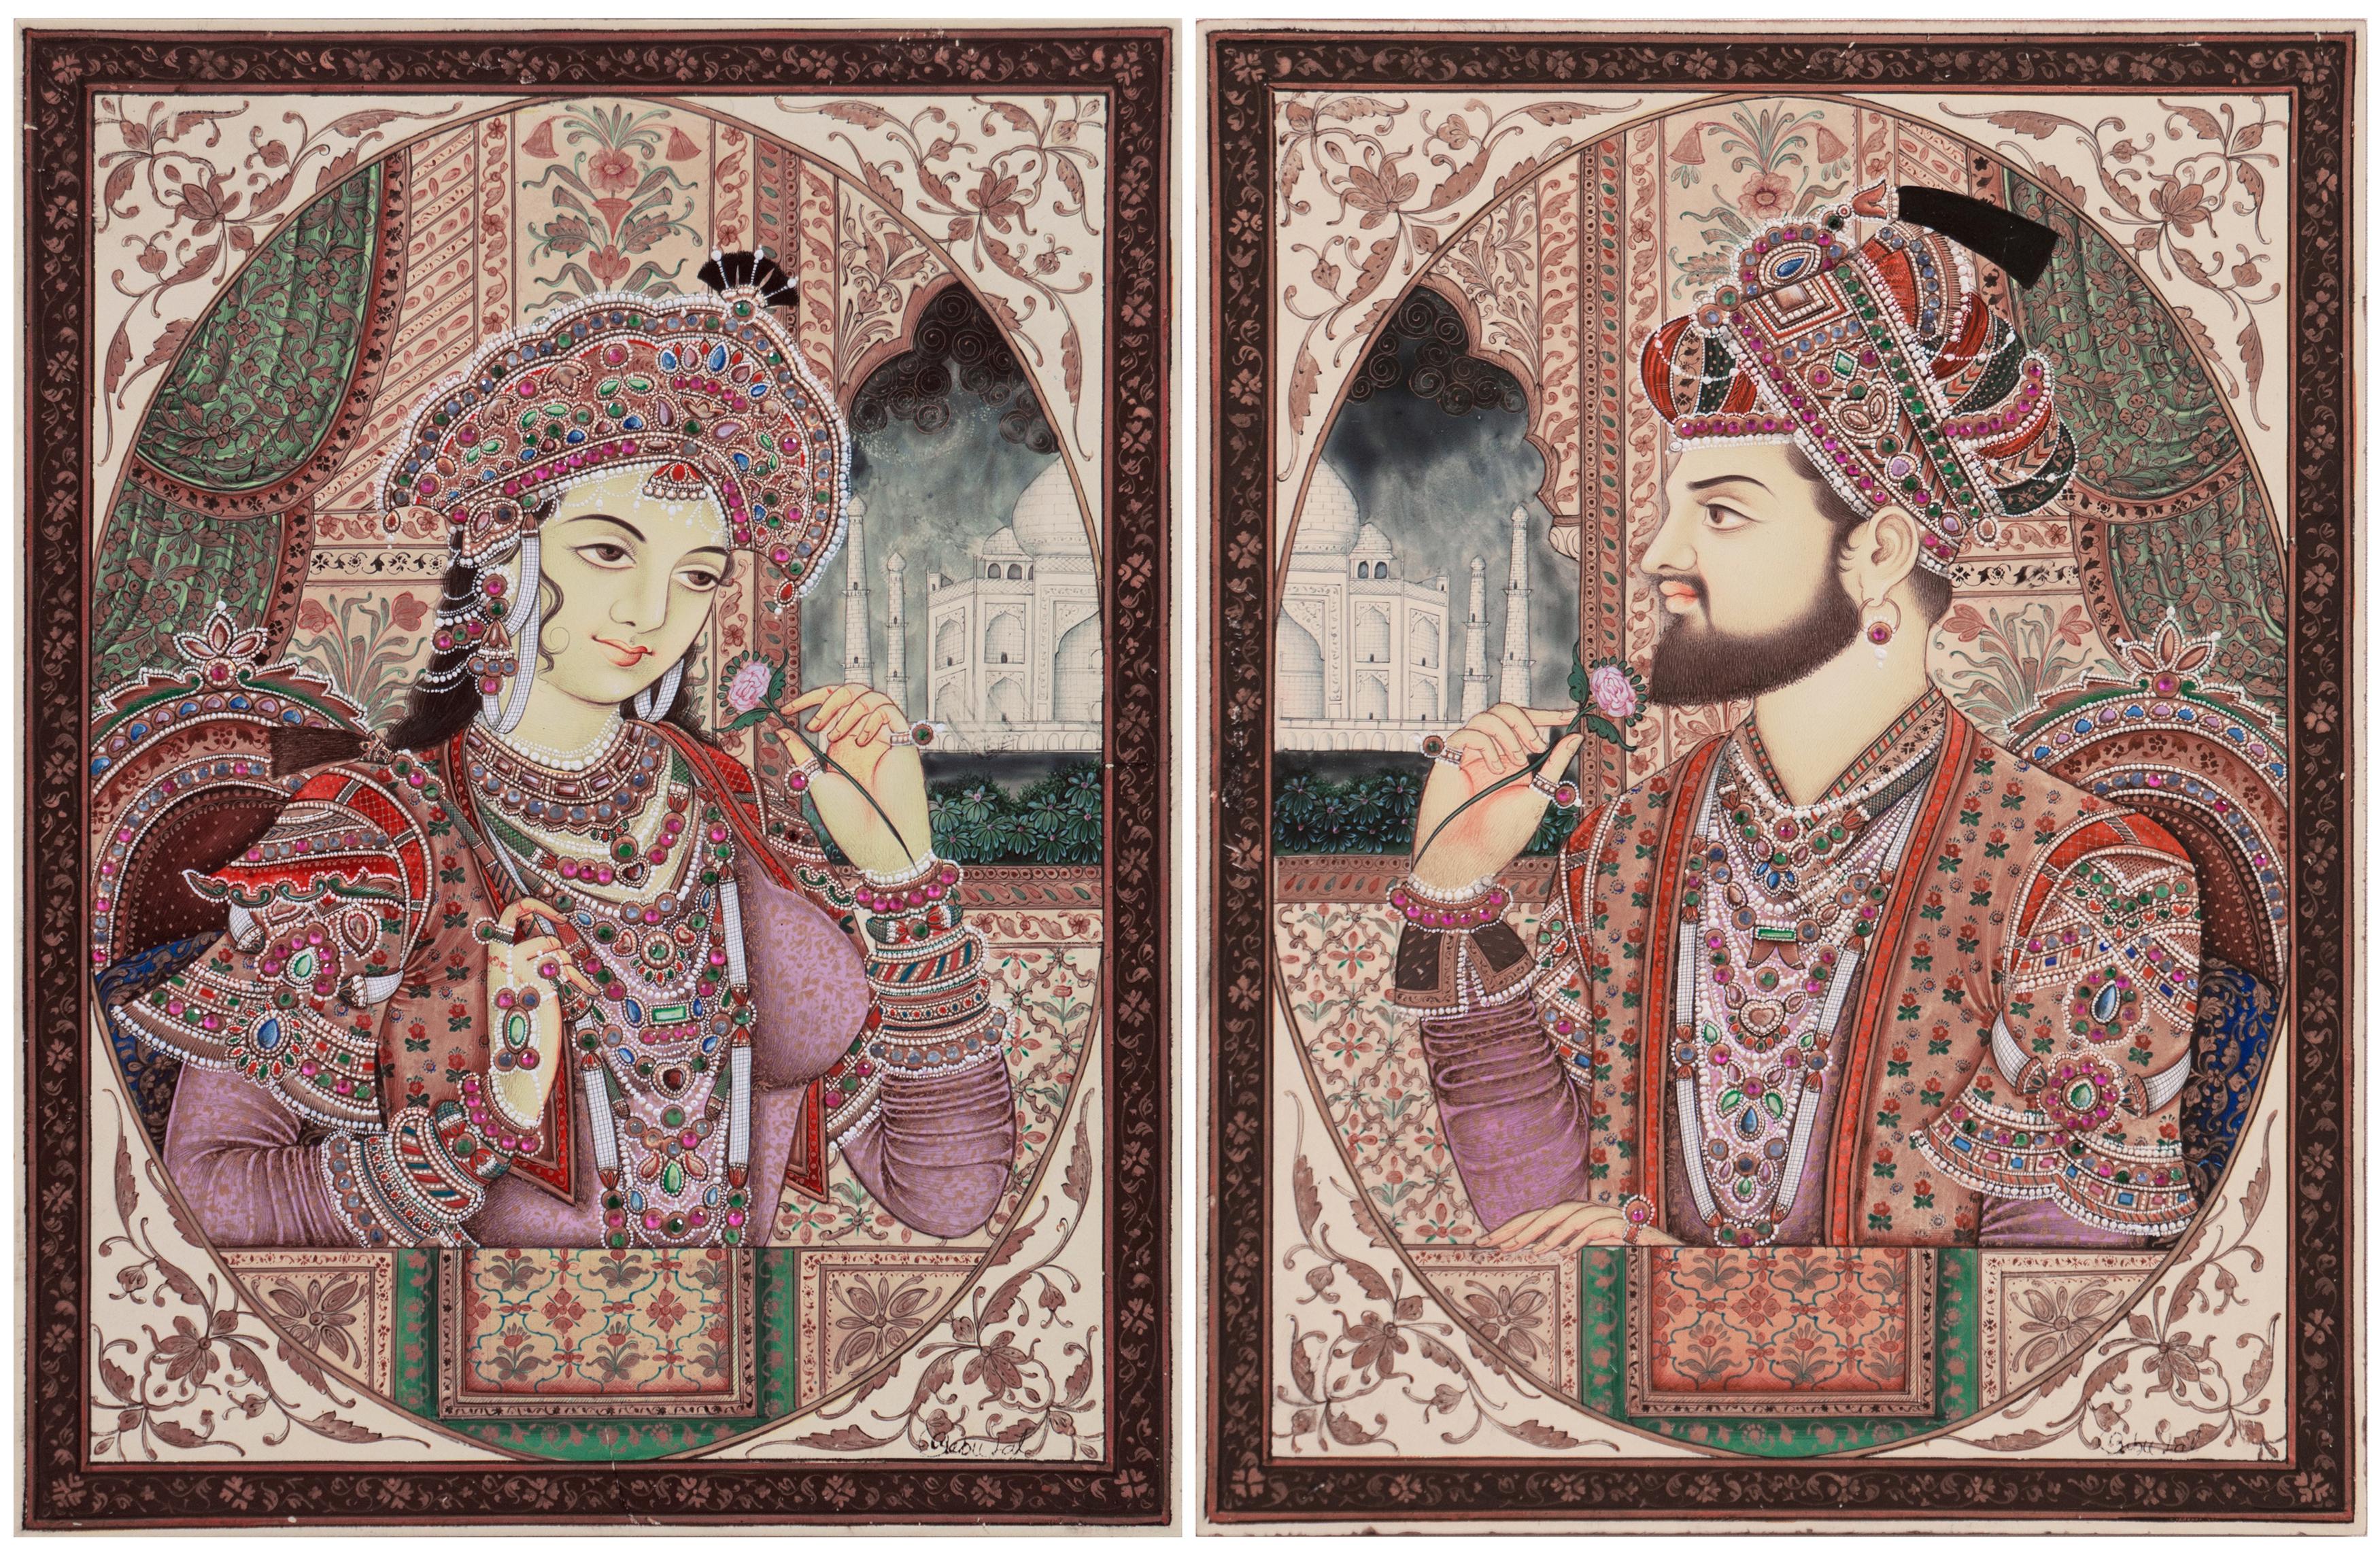 Babu Lal Marotia Figurative Painting - 'Shah Jahan and Mumtaz Mahal', Double Portrait, Mughal, Miniature, Jaipur, India